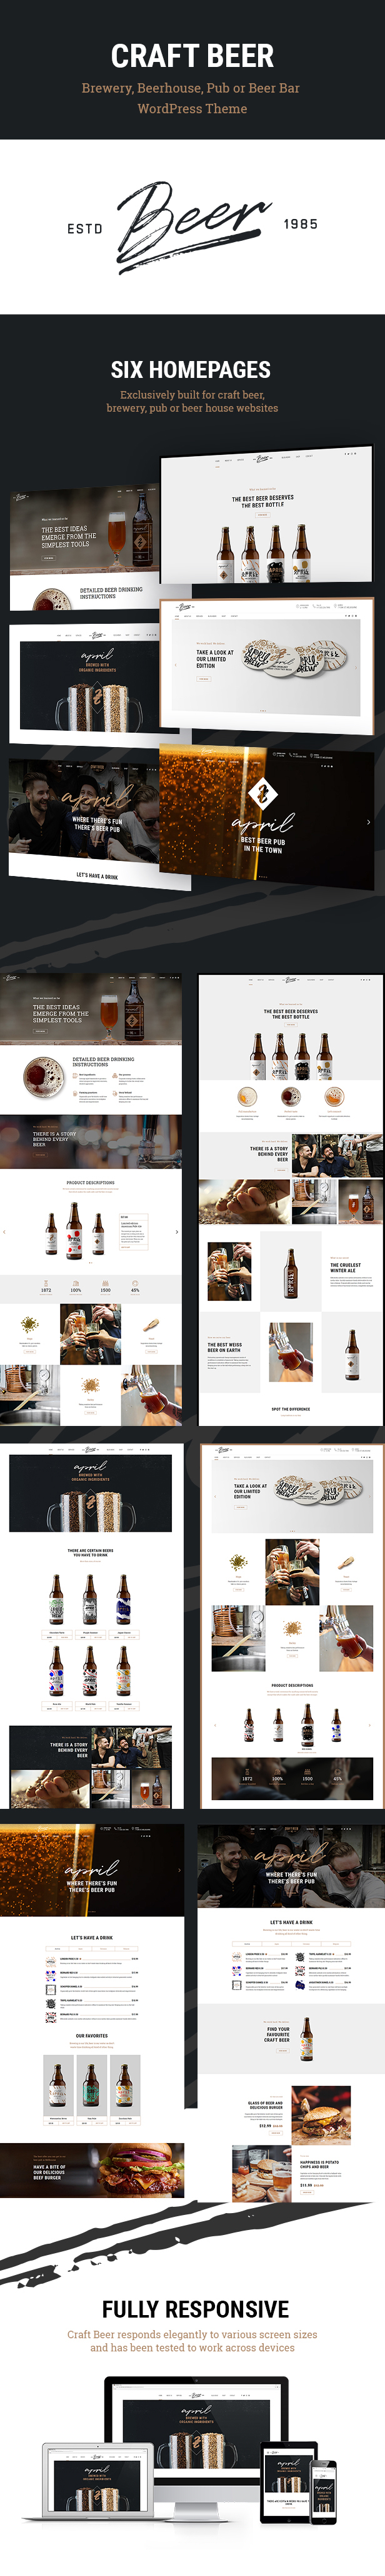 Craft Beer - Brewery & Pub WordPress Theme - 1